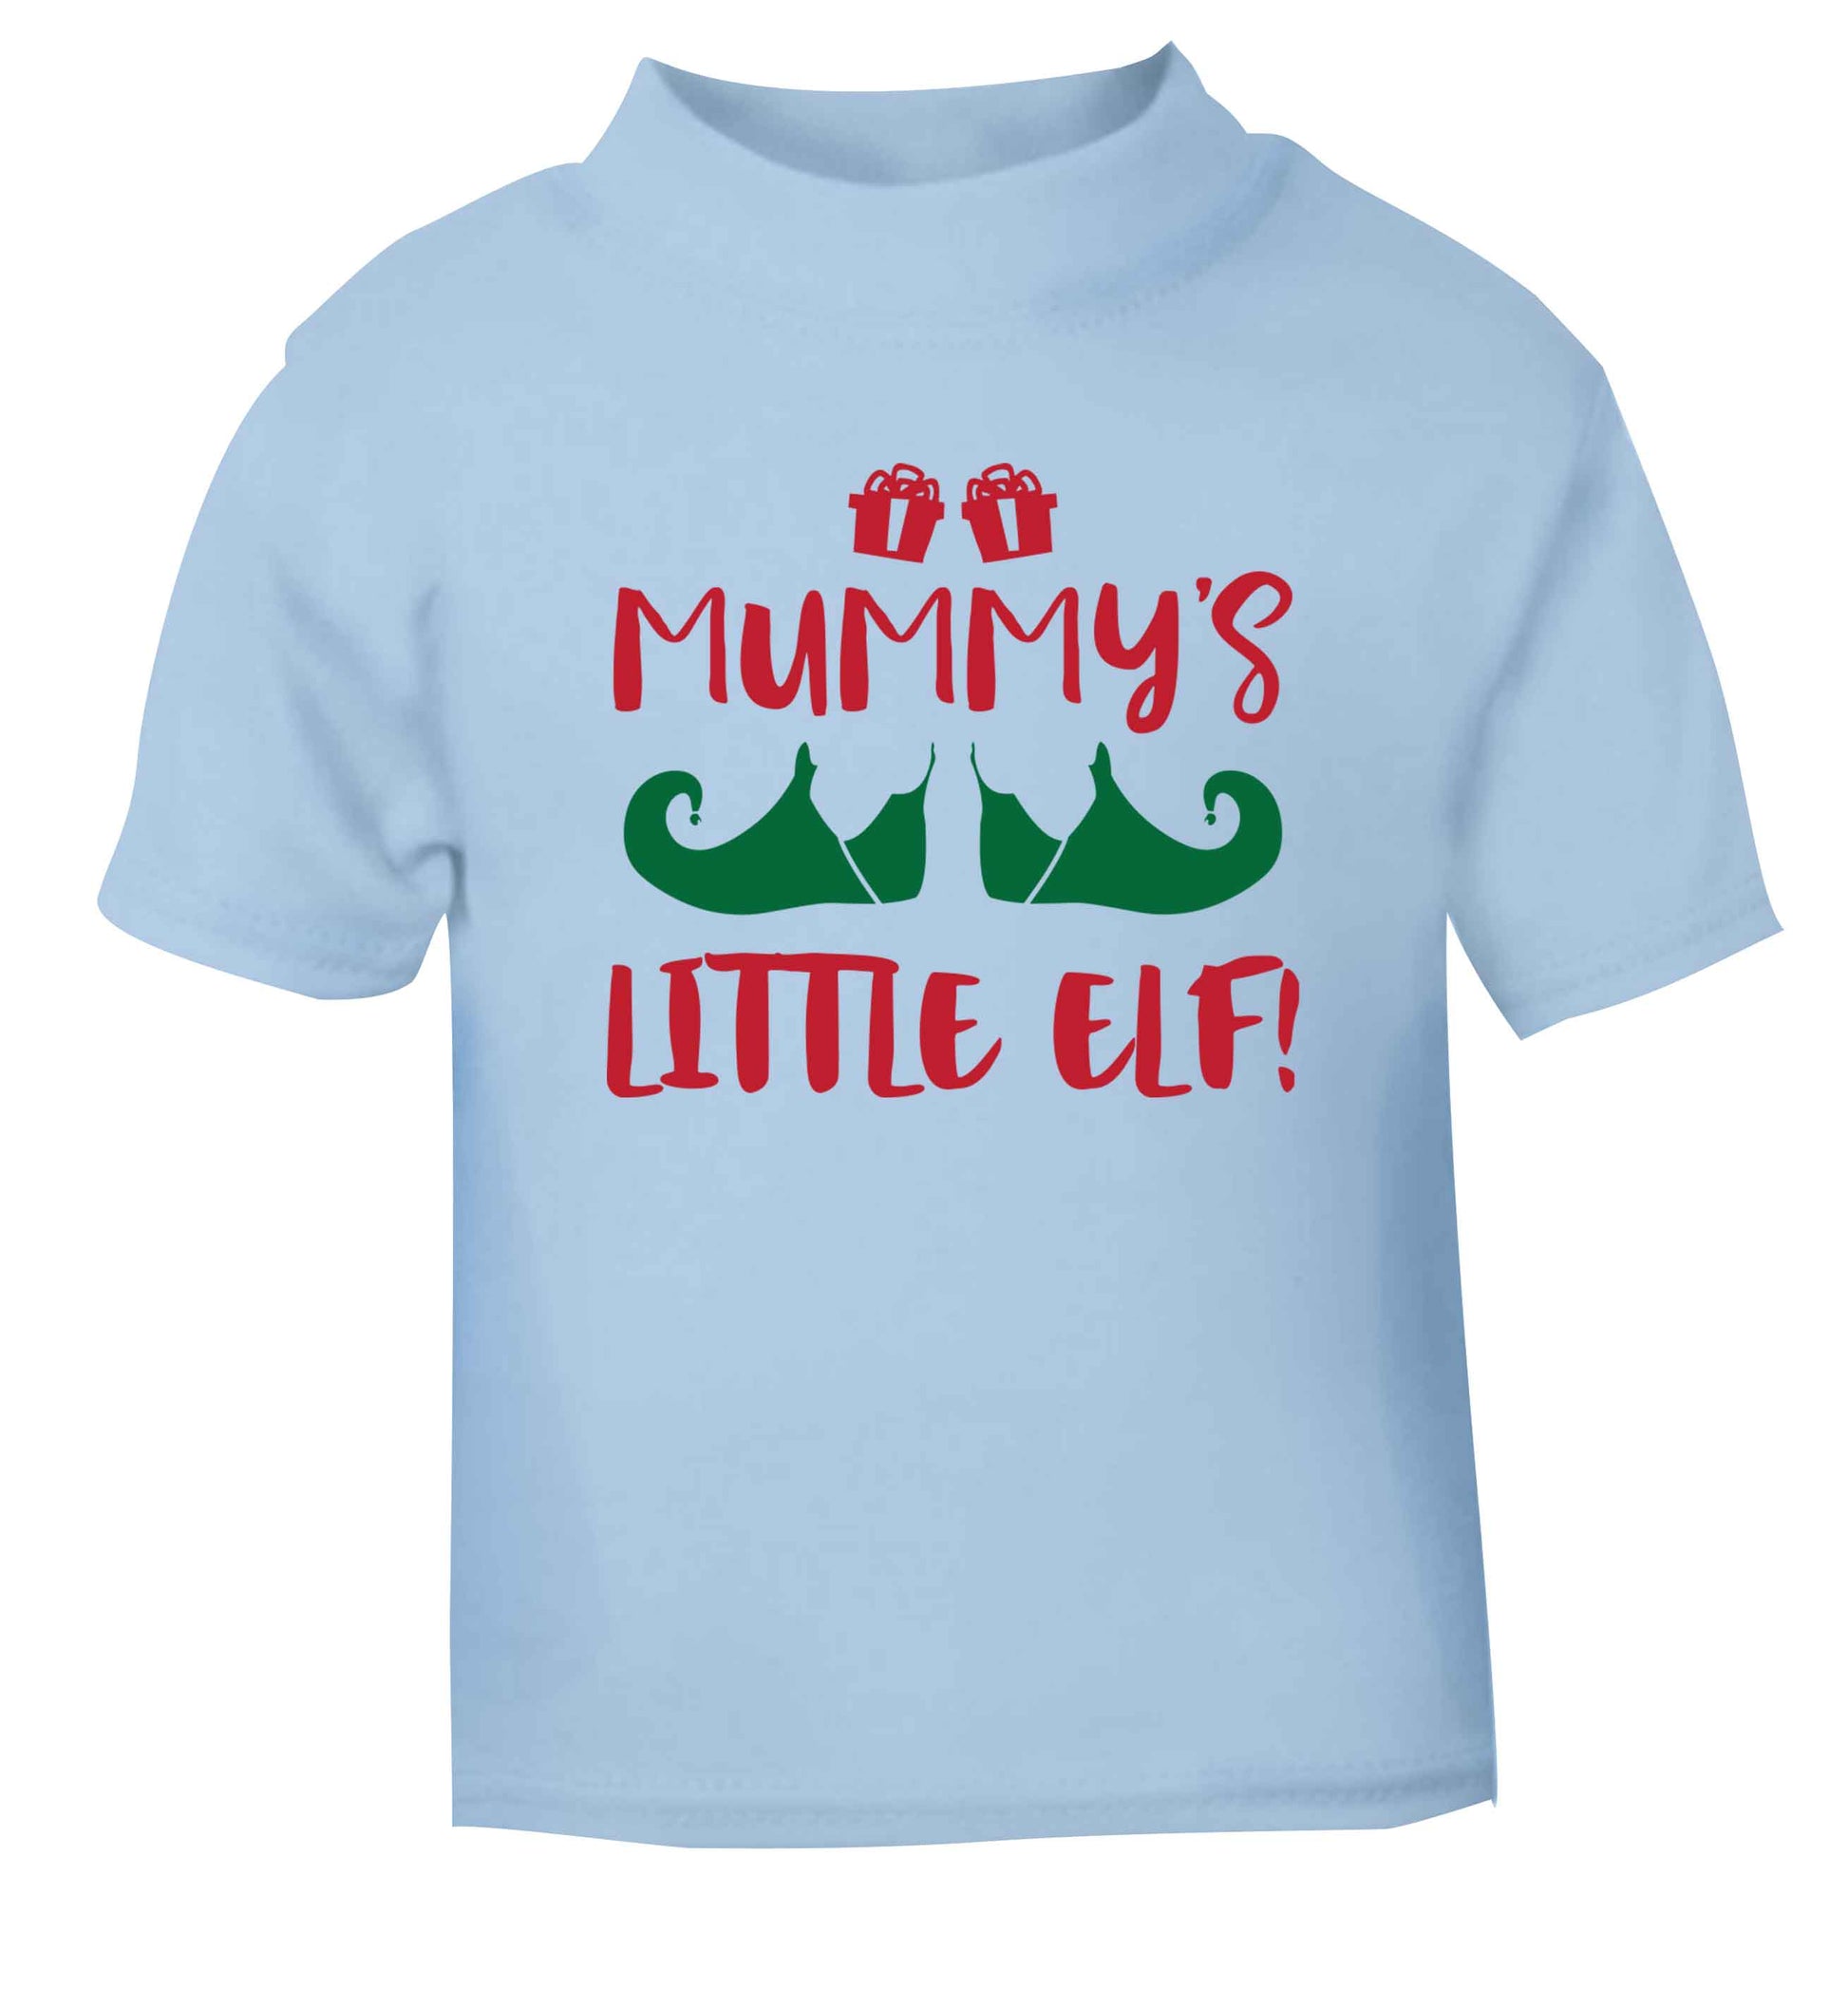 Mummy's little elf light blue Baby Toddler Tshirt 2 Years